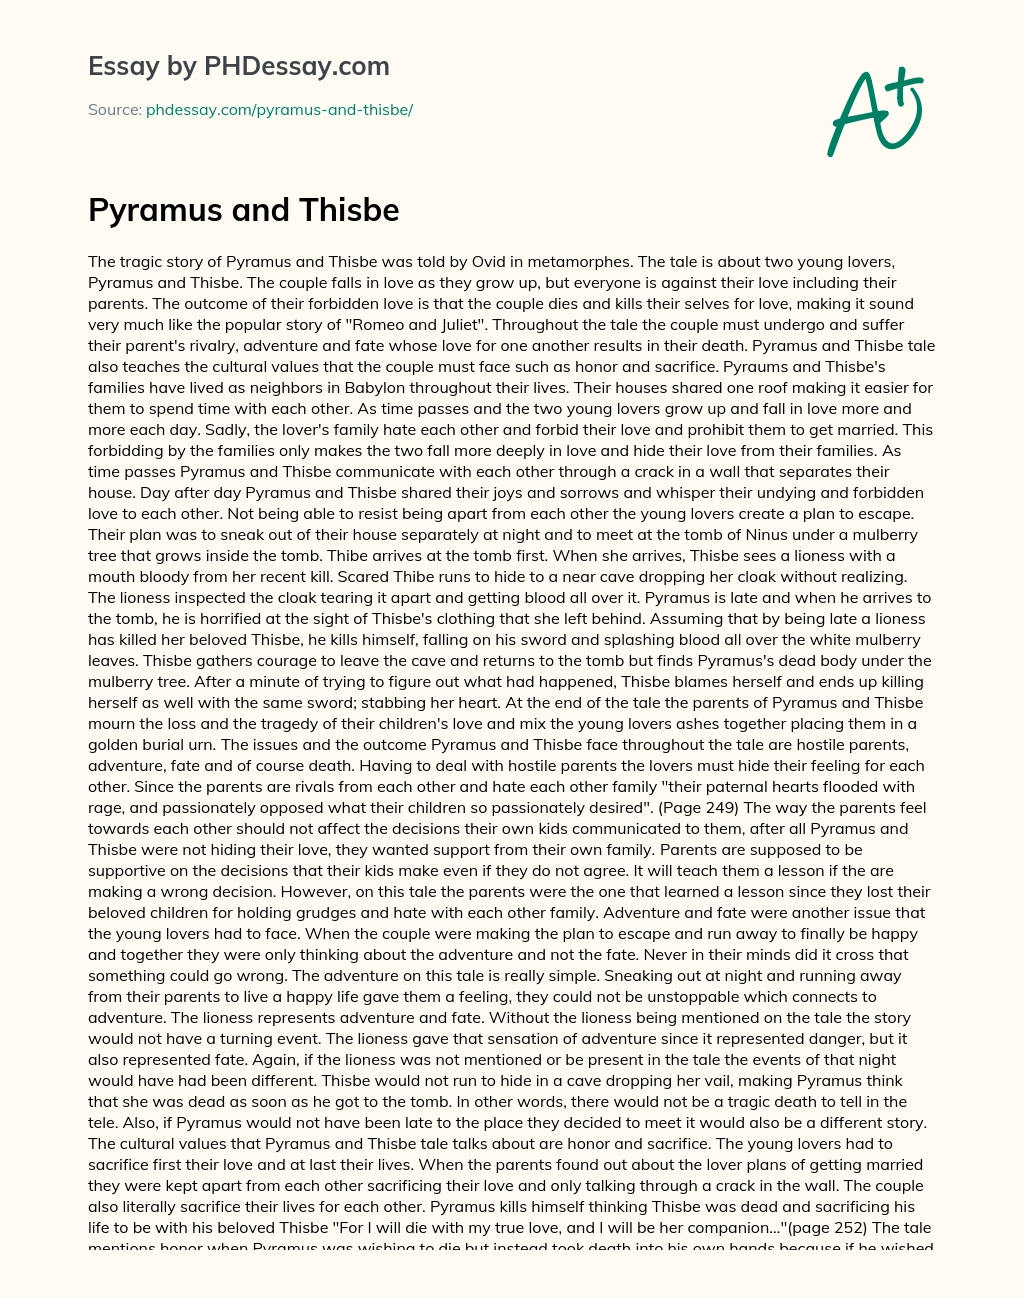 Pyramus and Thisbe essay